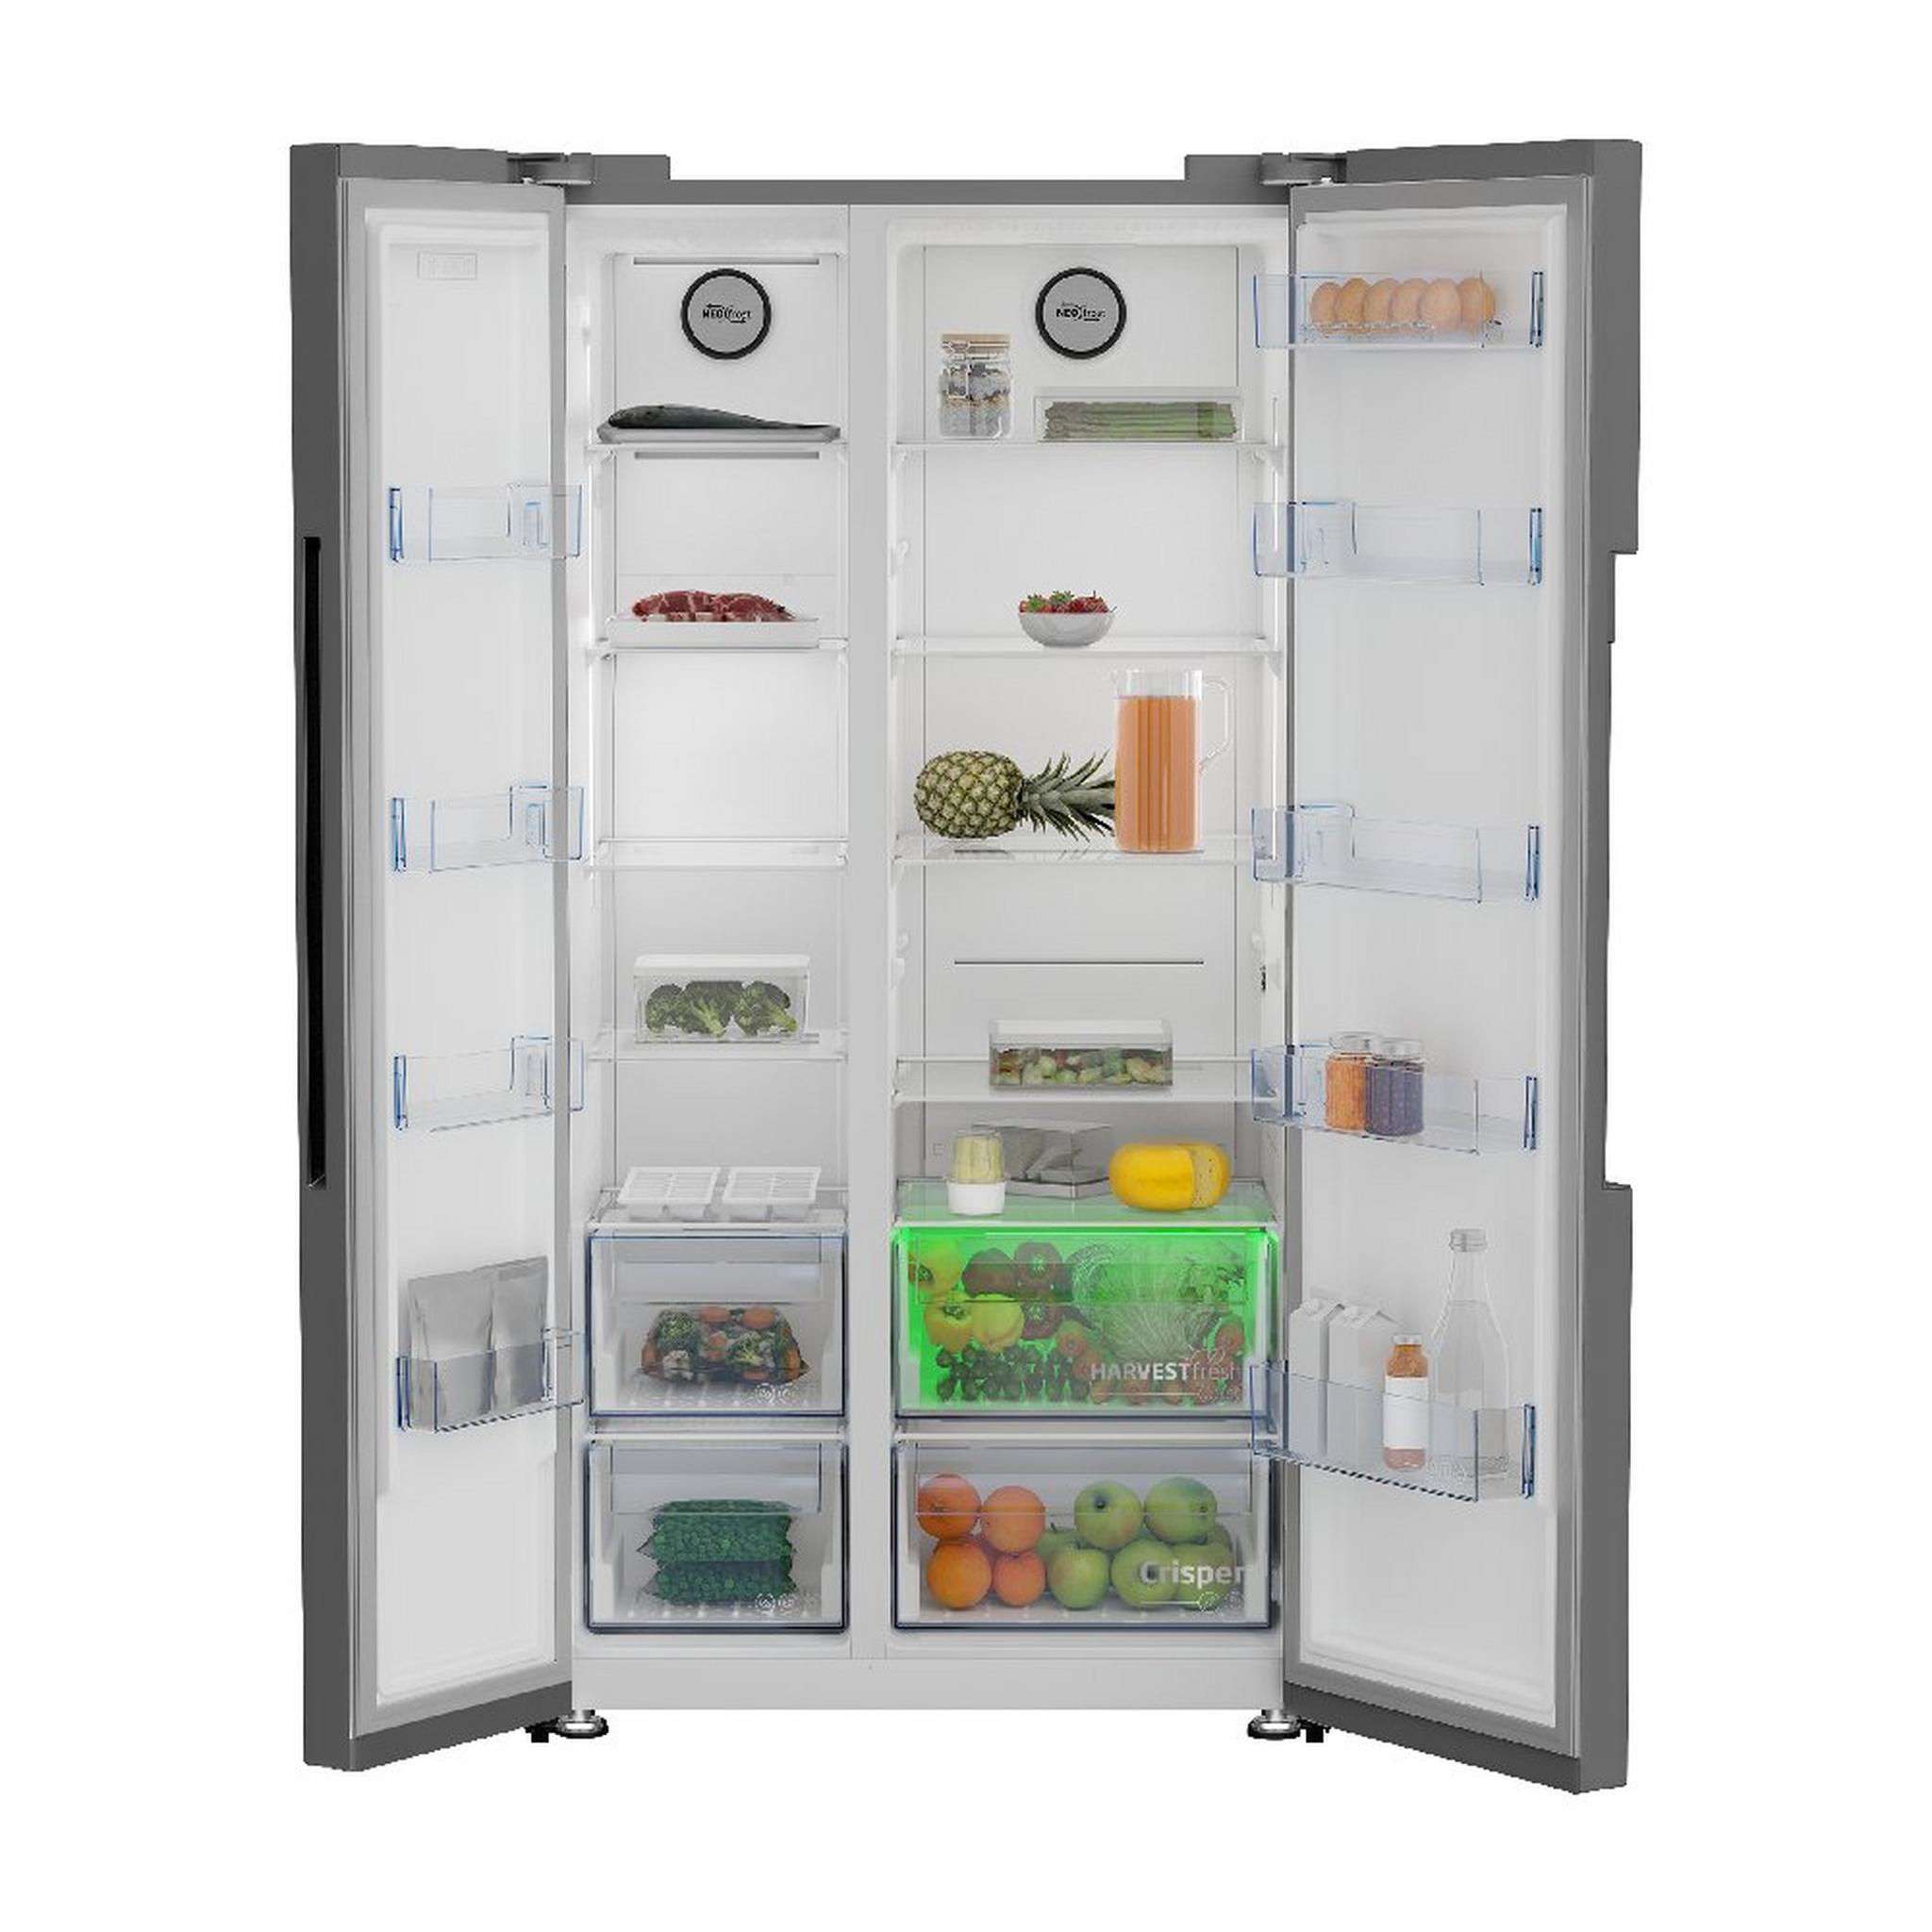 BEKO Side by Side Refrigerator, 22.6CFT, 640 Liters, GNE741S – Silver